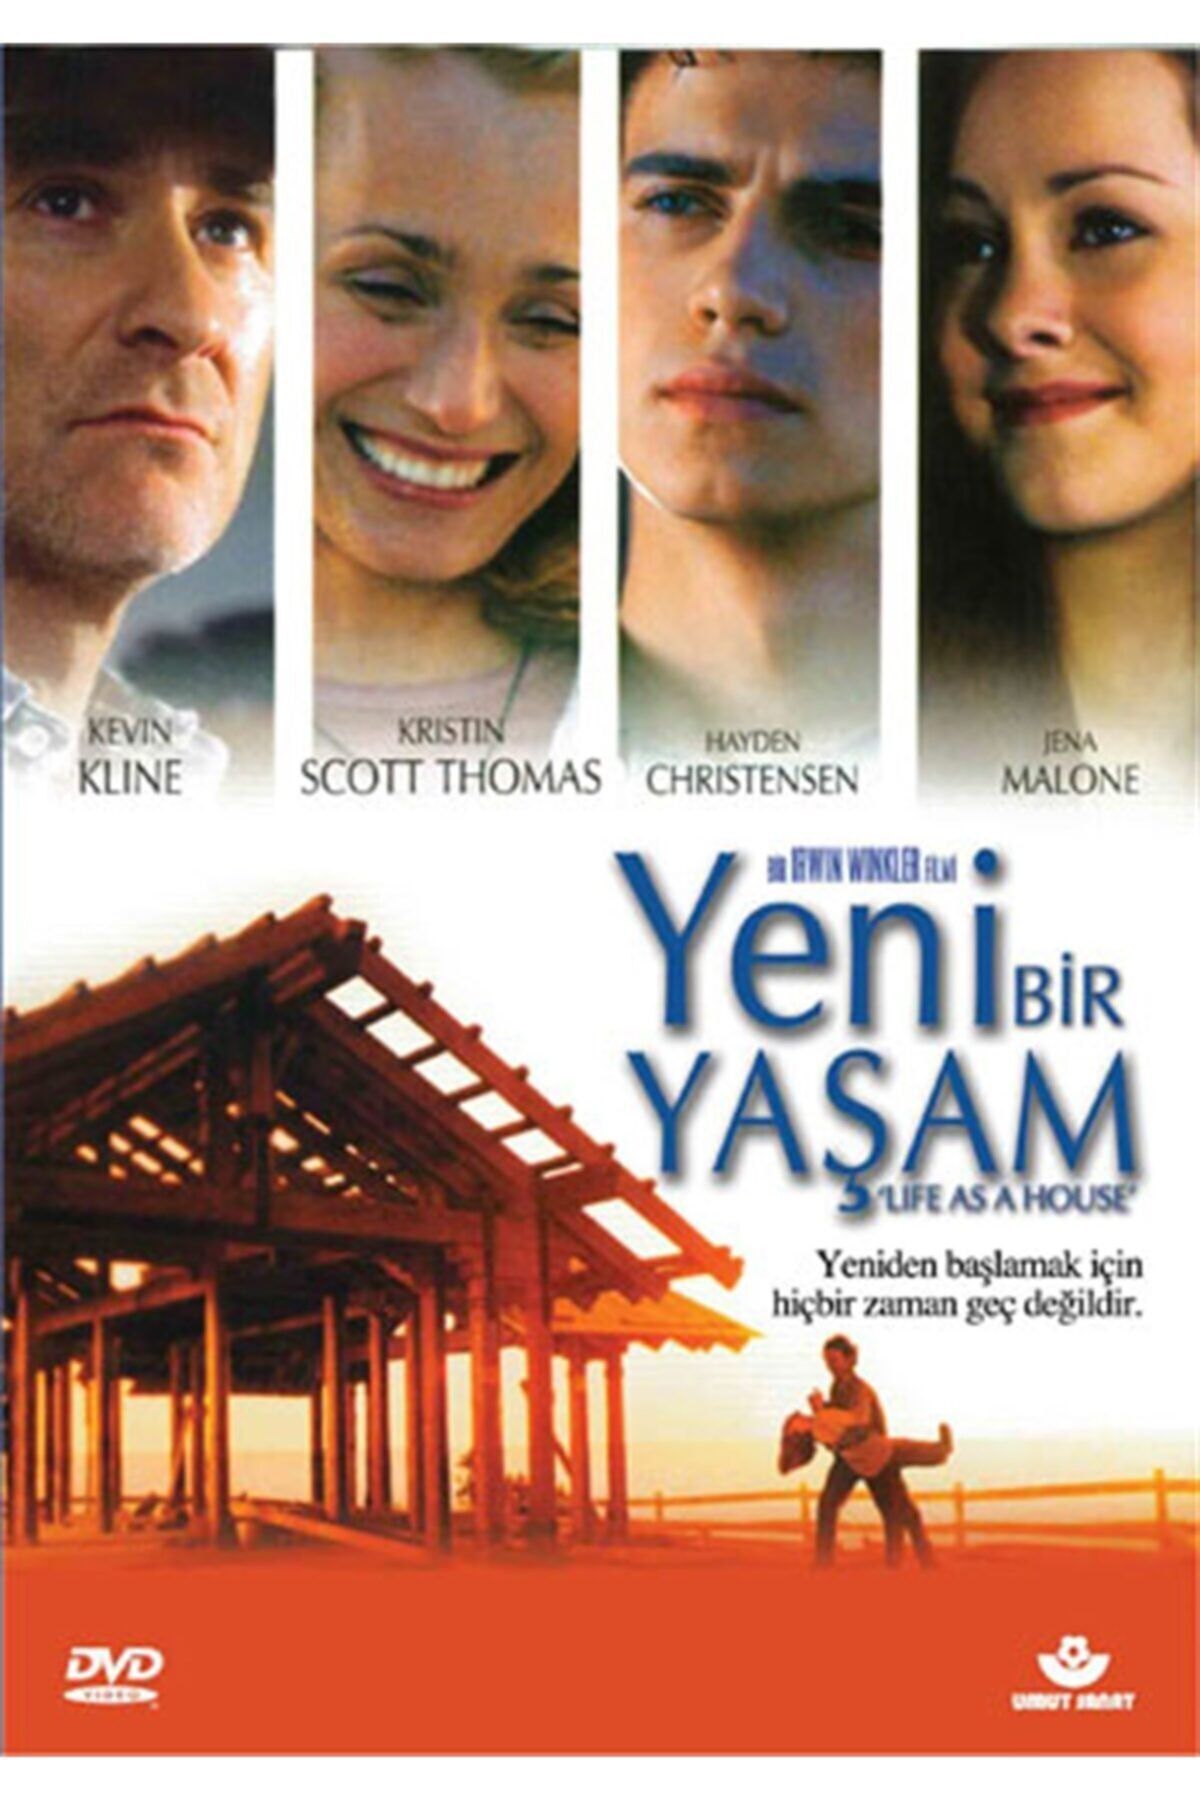 Life as a House (2001) 448Kbps 23.976Fps 48Khz 5.1Ch DVD Turkish Audio TAC